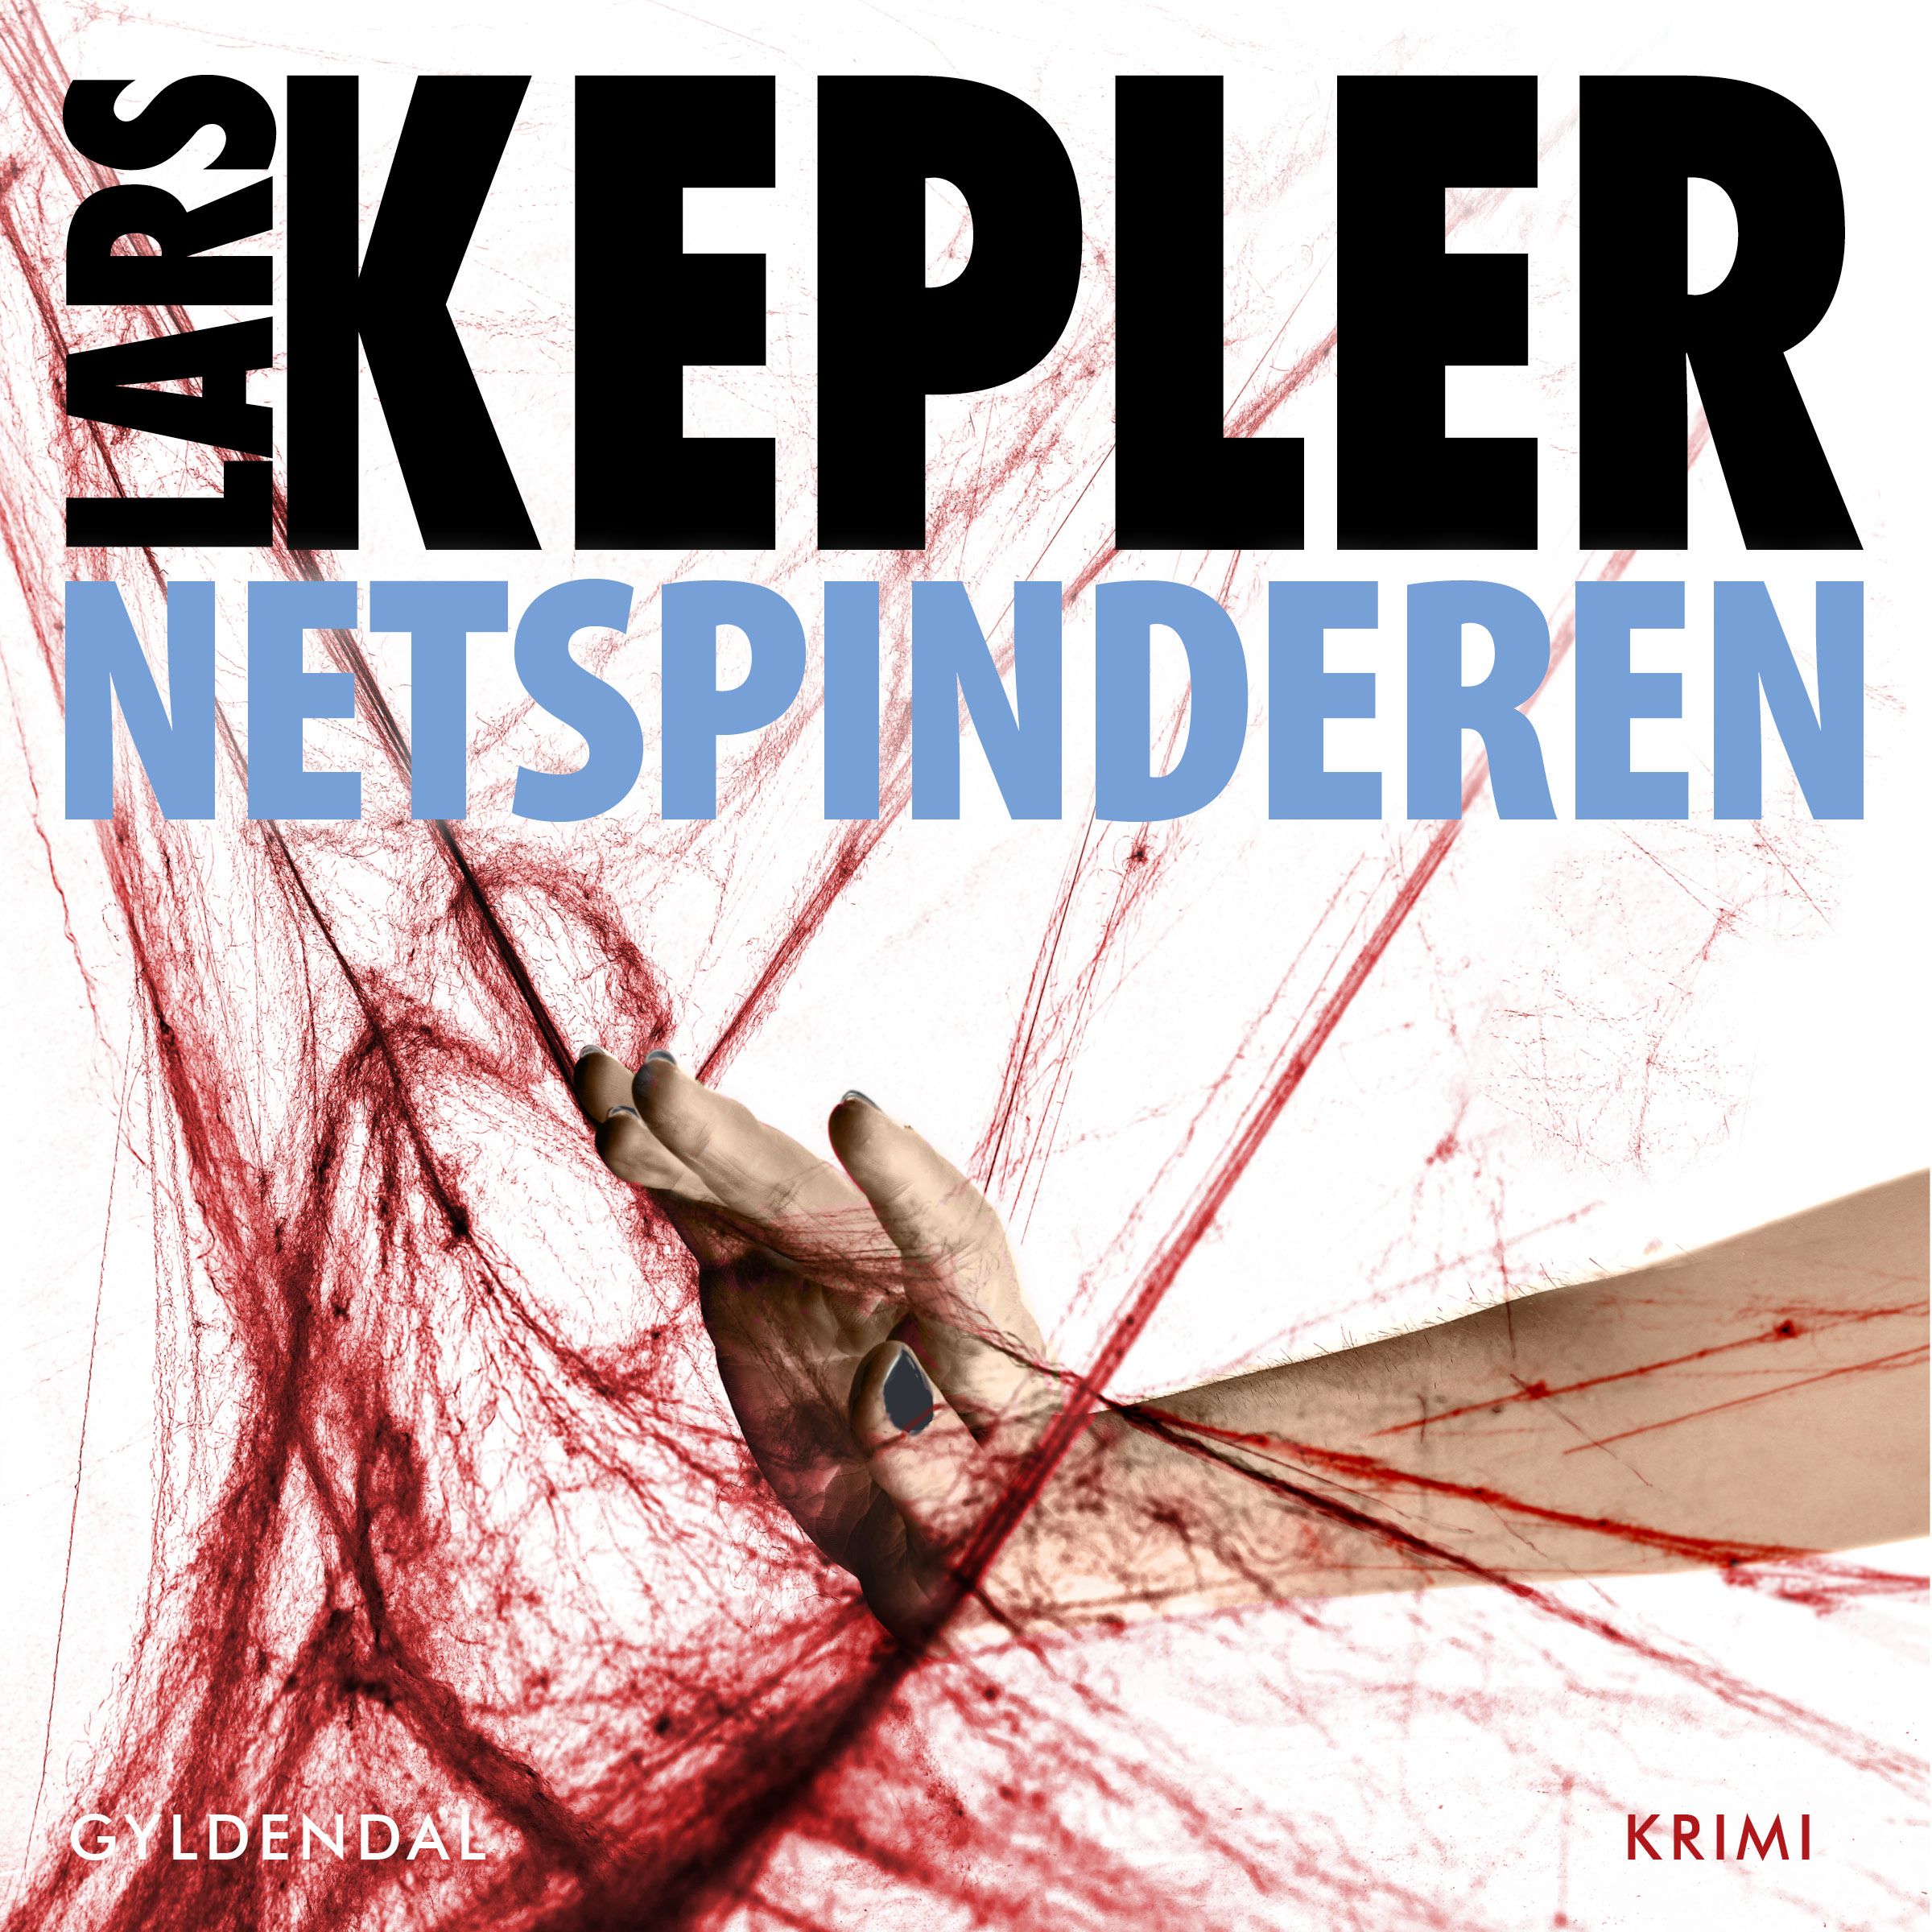 Netspinderen, ljudbok av Lars Kepler